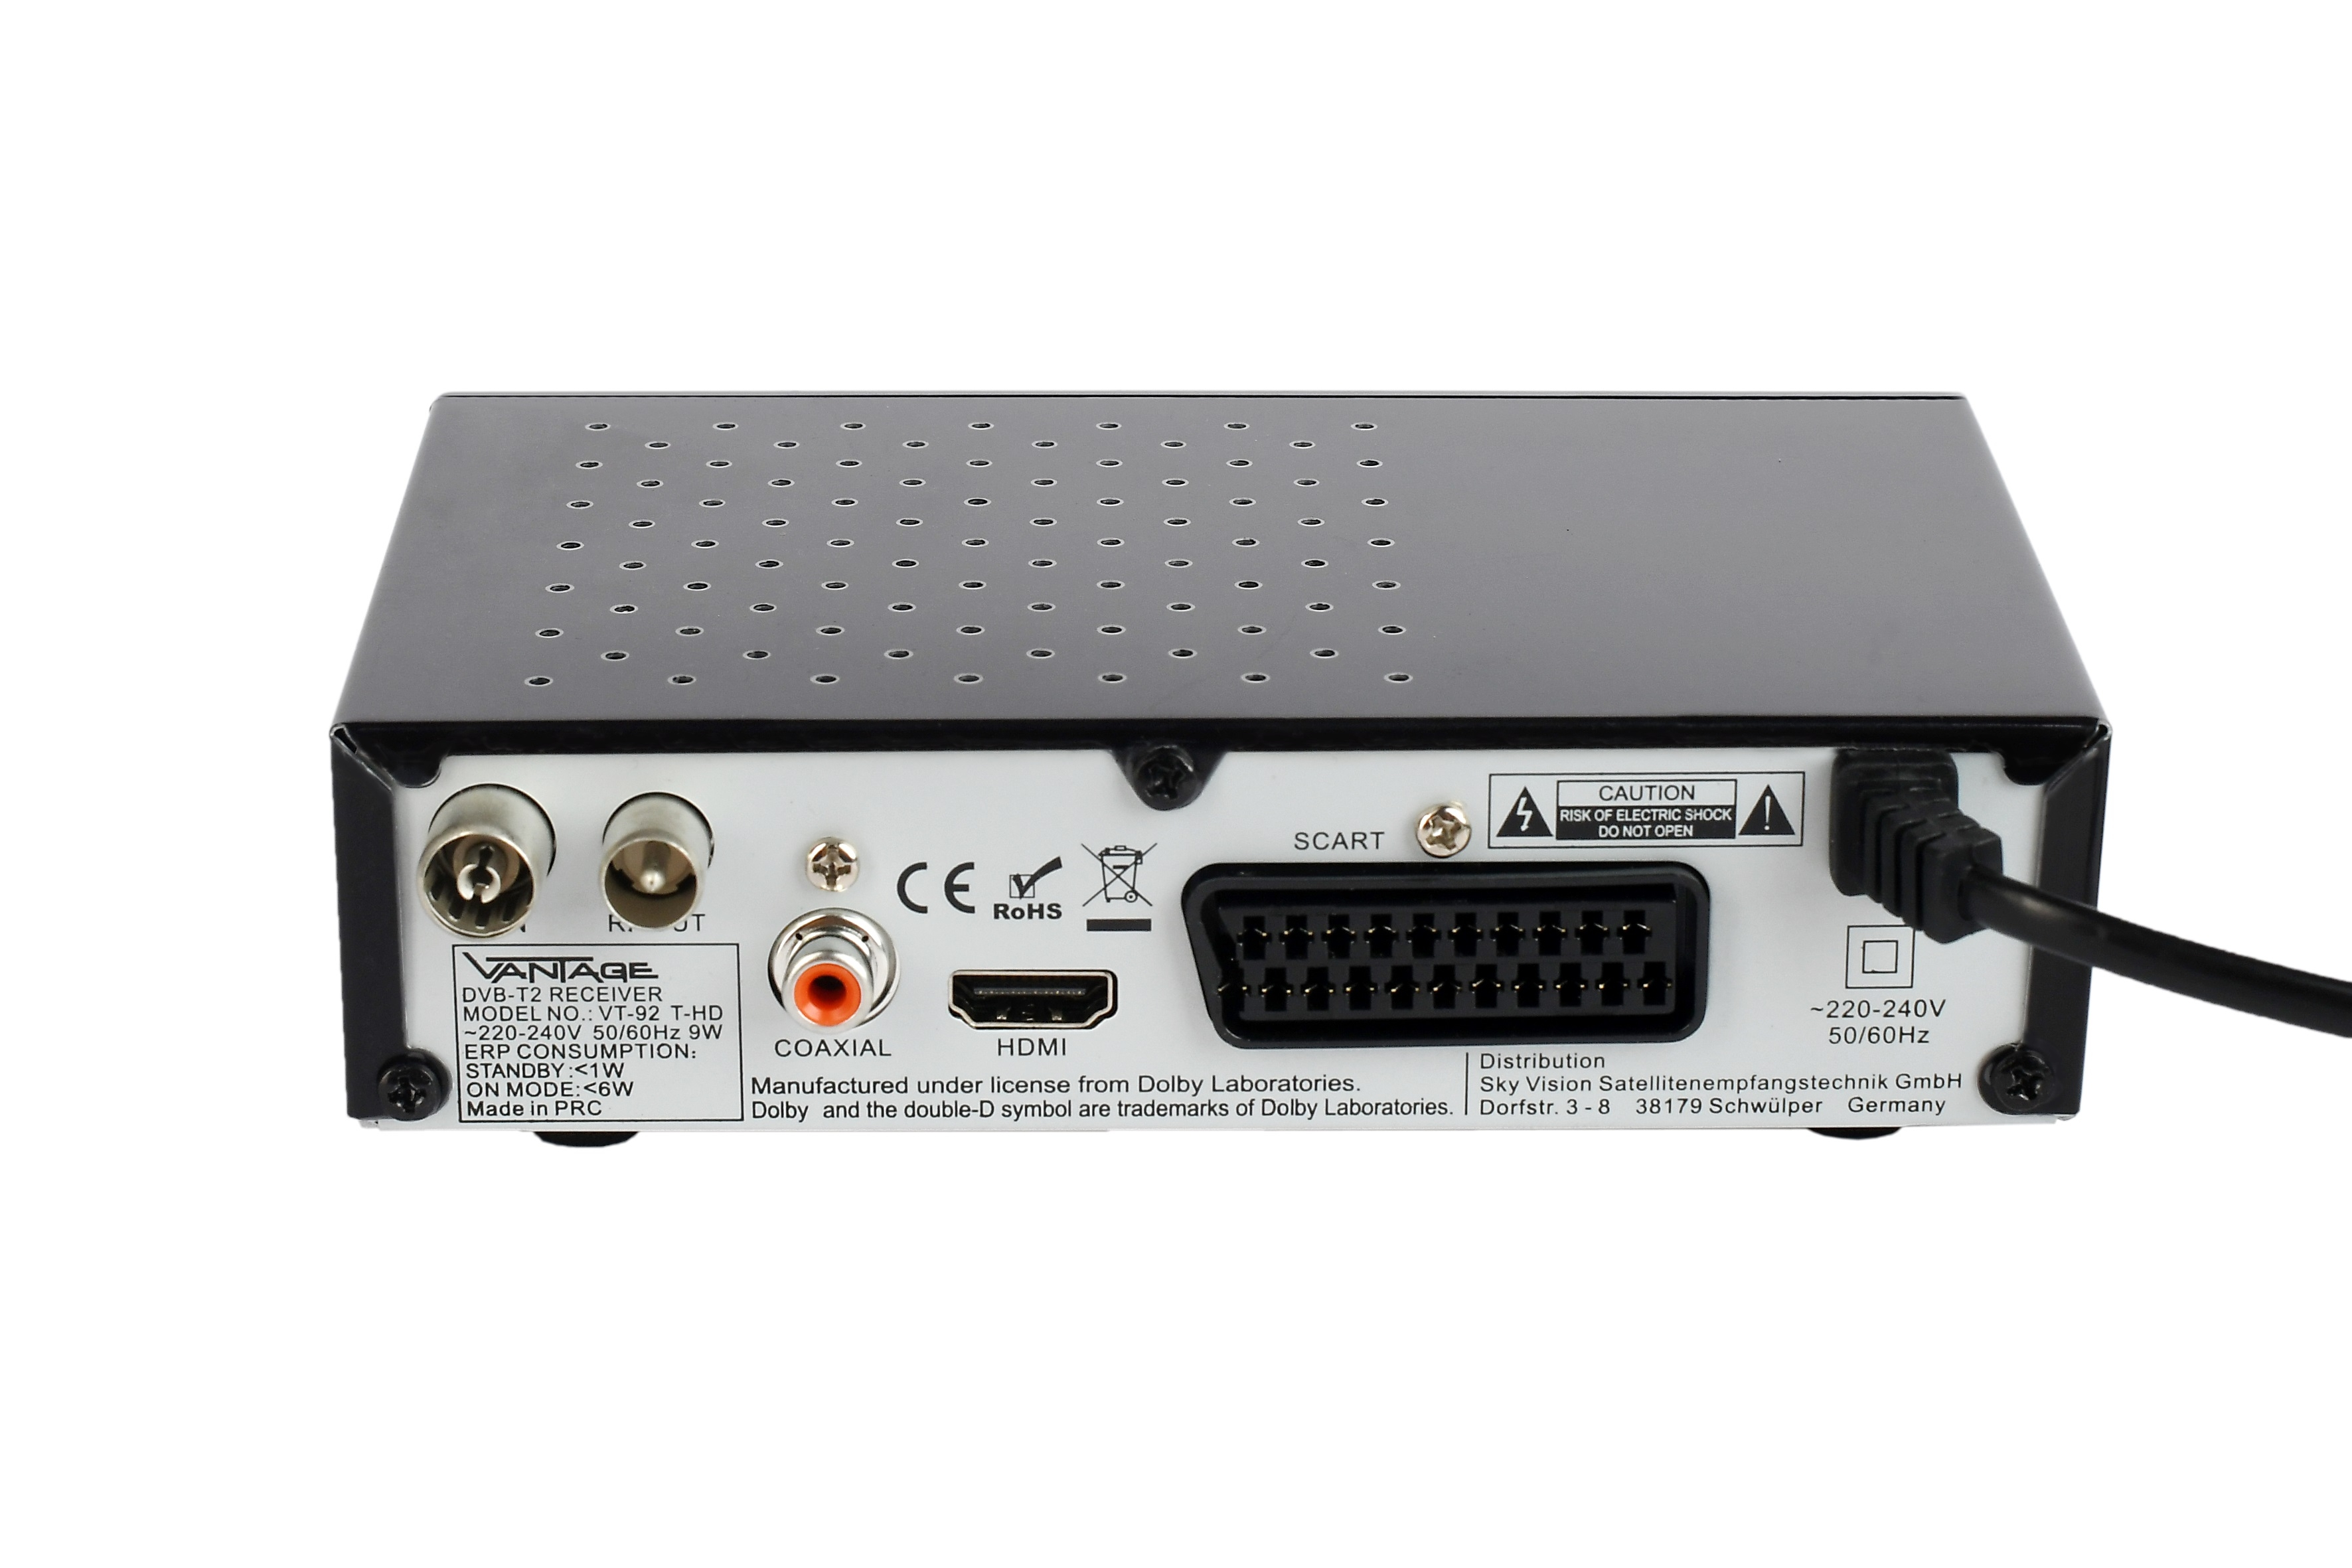 VT-92 DVB-T2 (DVB-T, (H.265), VANTAGE schwarz) DVB-T-Receiver